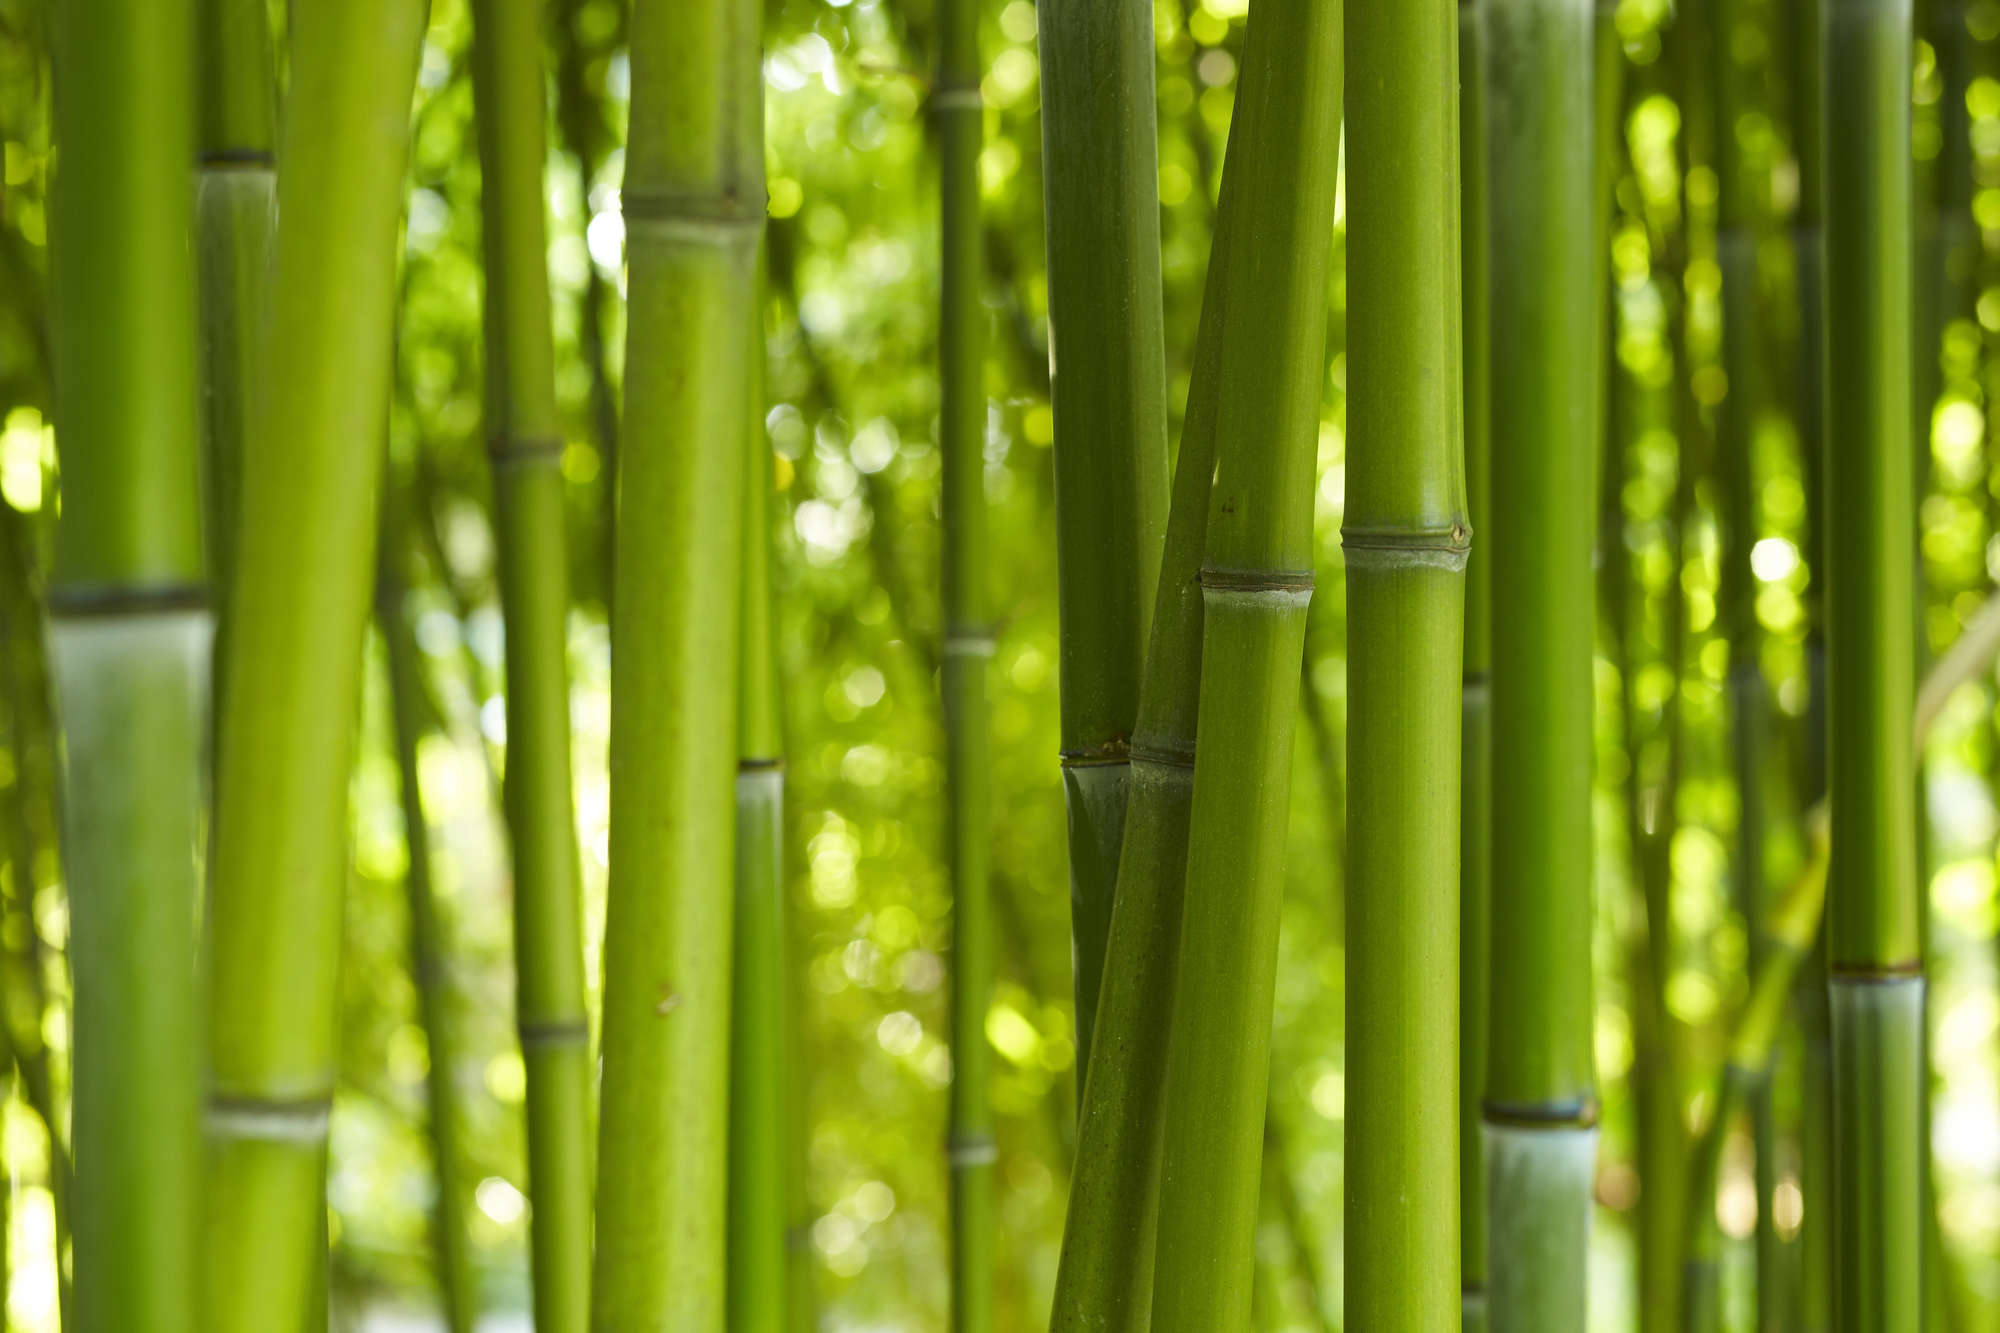             Natuurbehang Bamboe Close-up op Premium Smooth Fleece
        